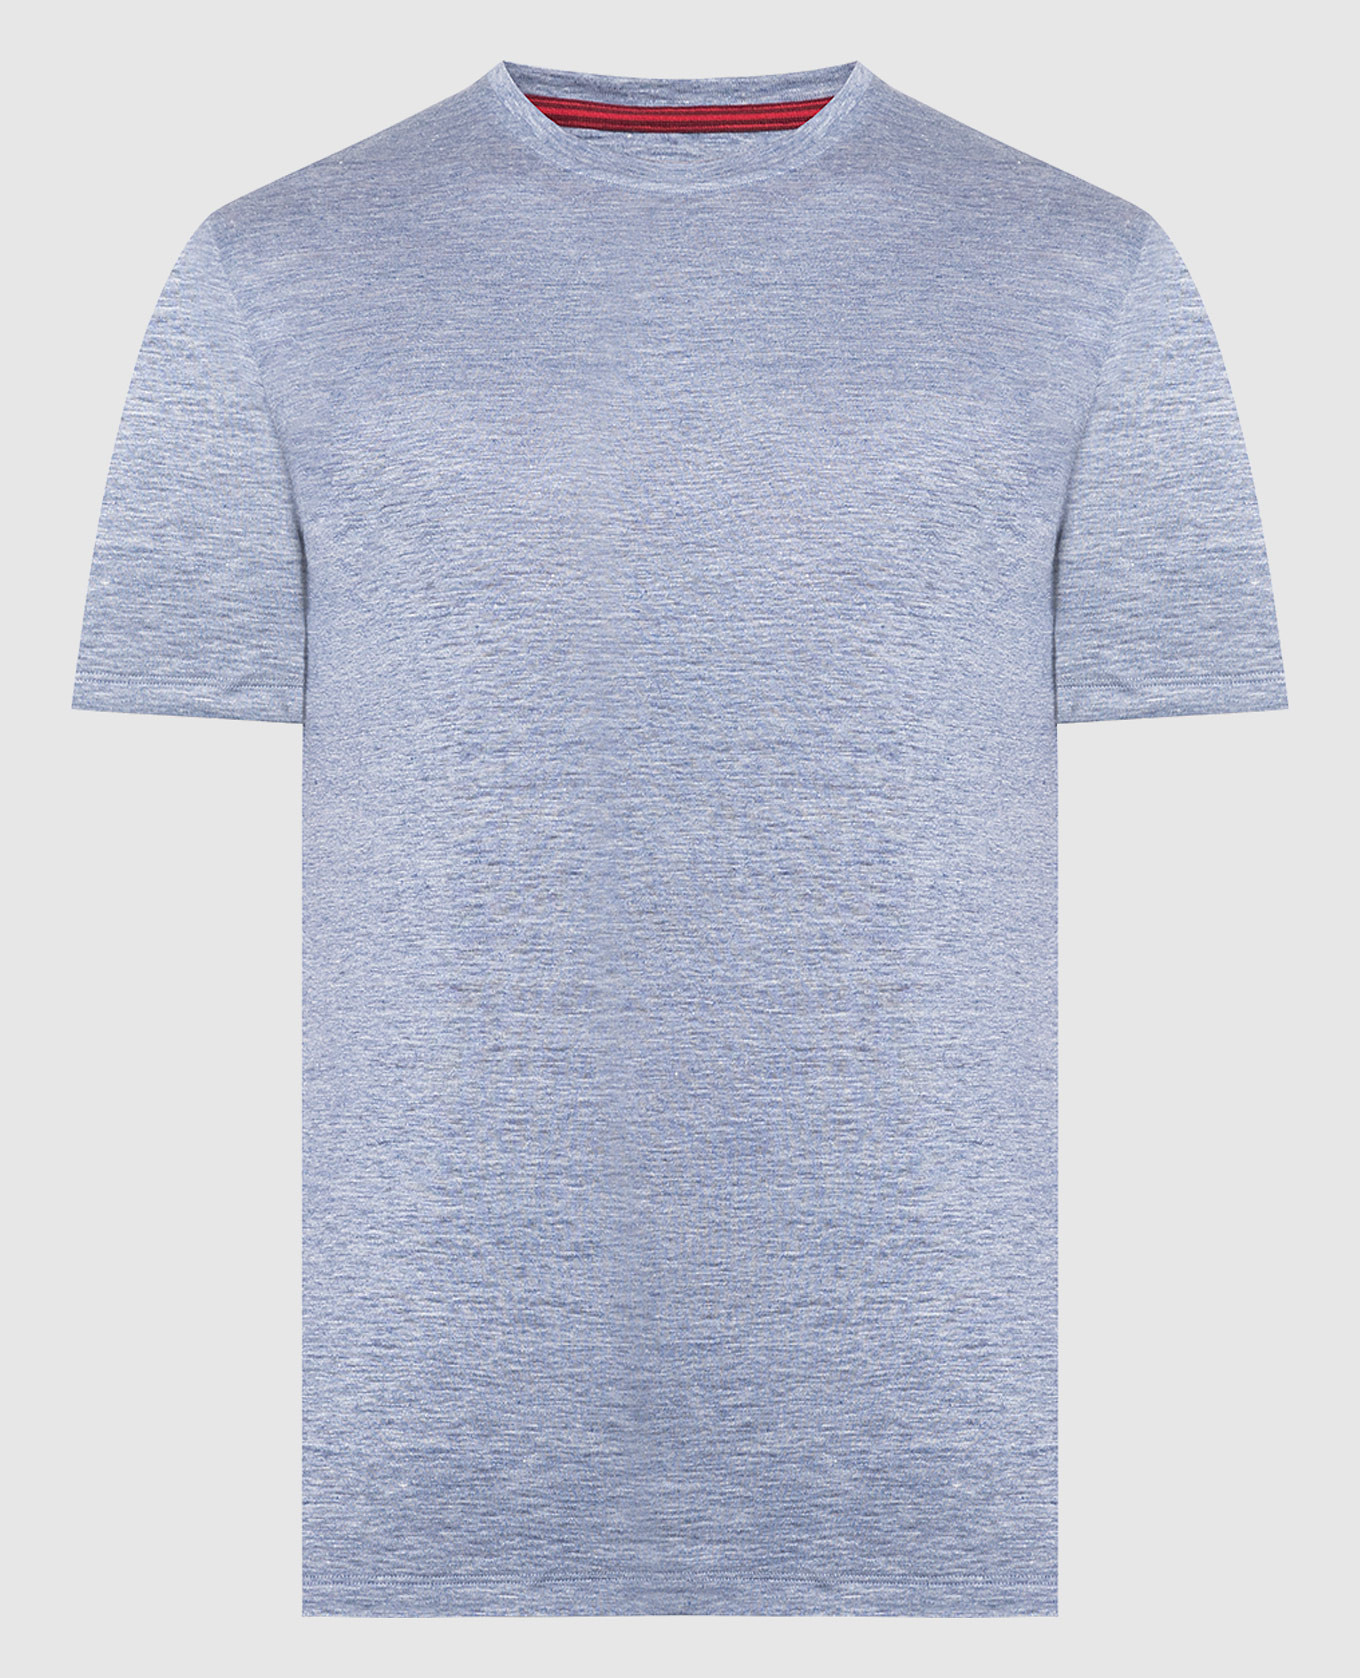 Blue melange linen t-shirt